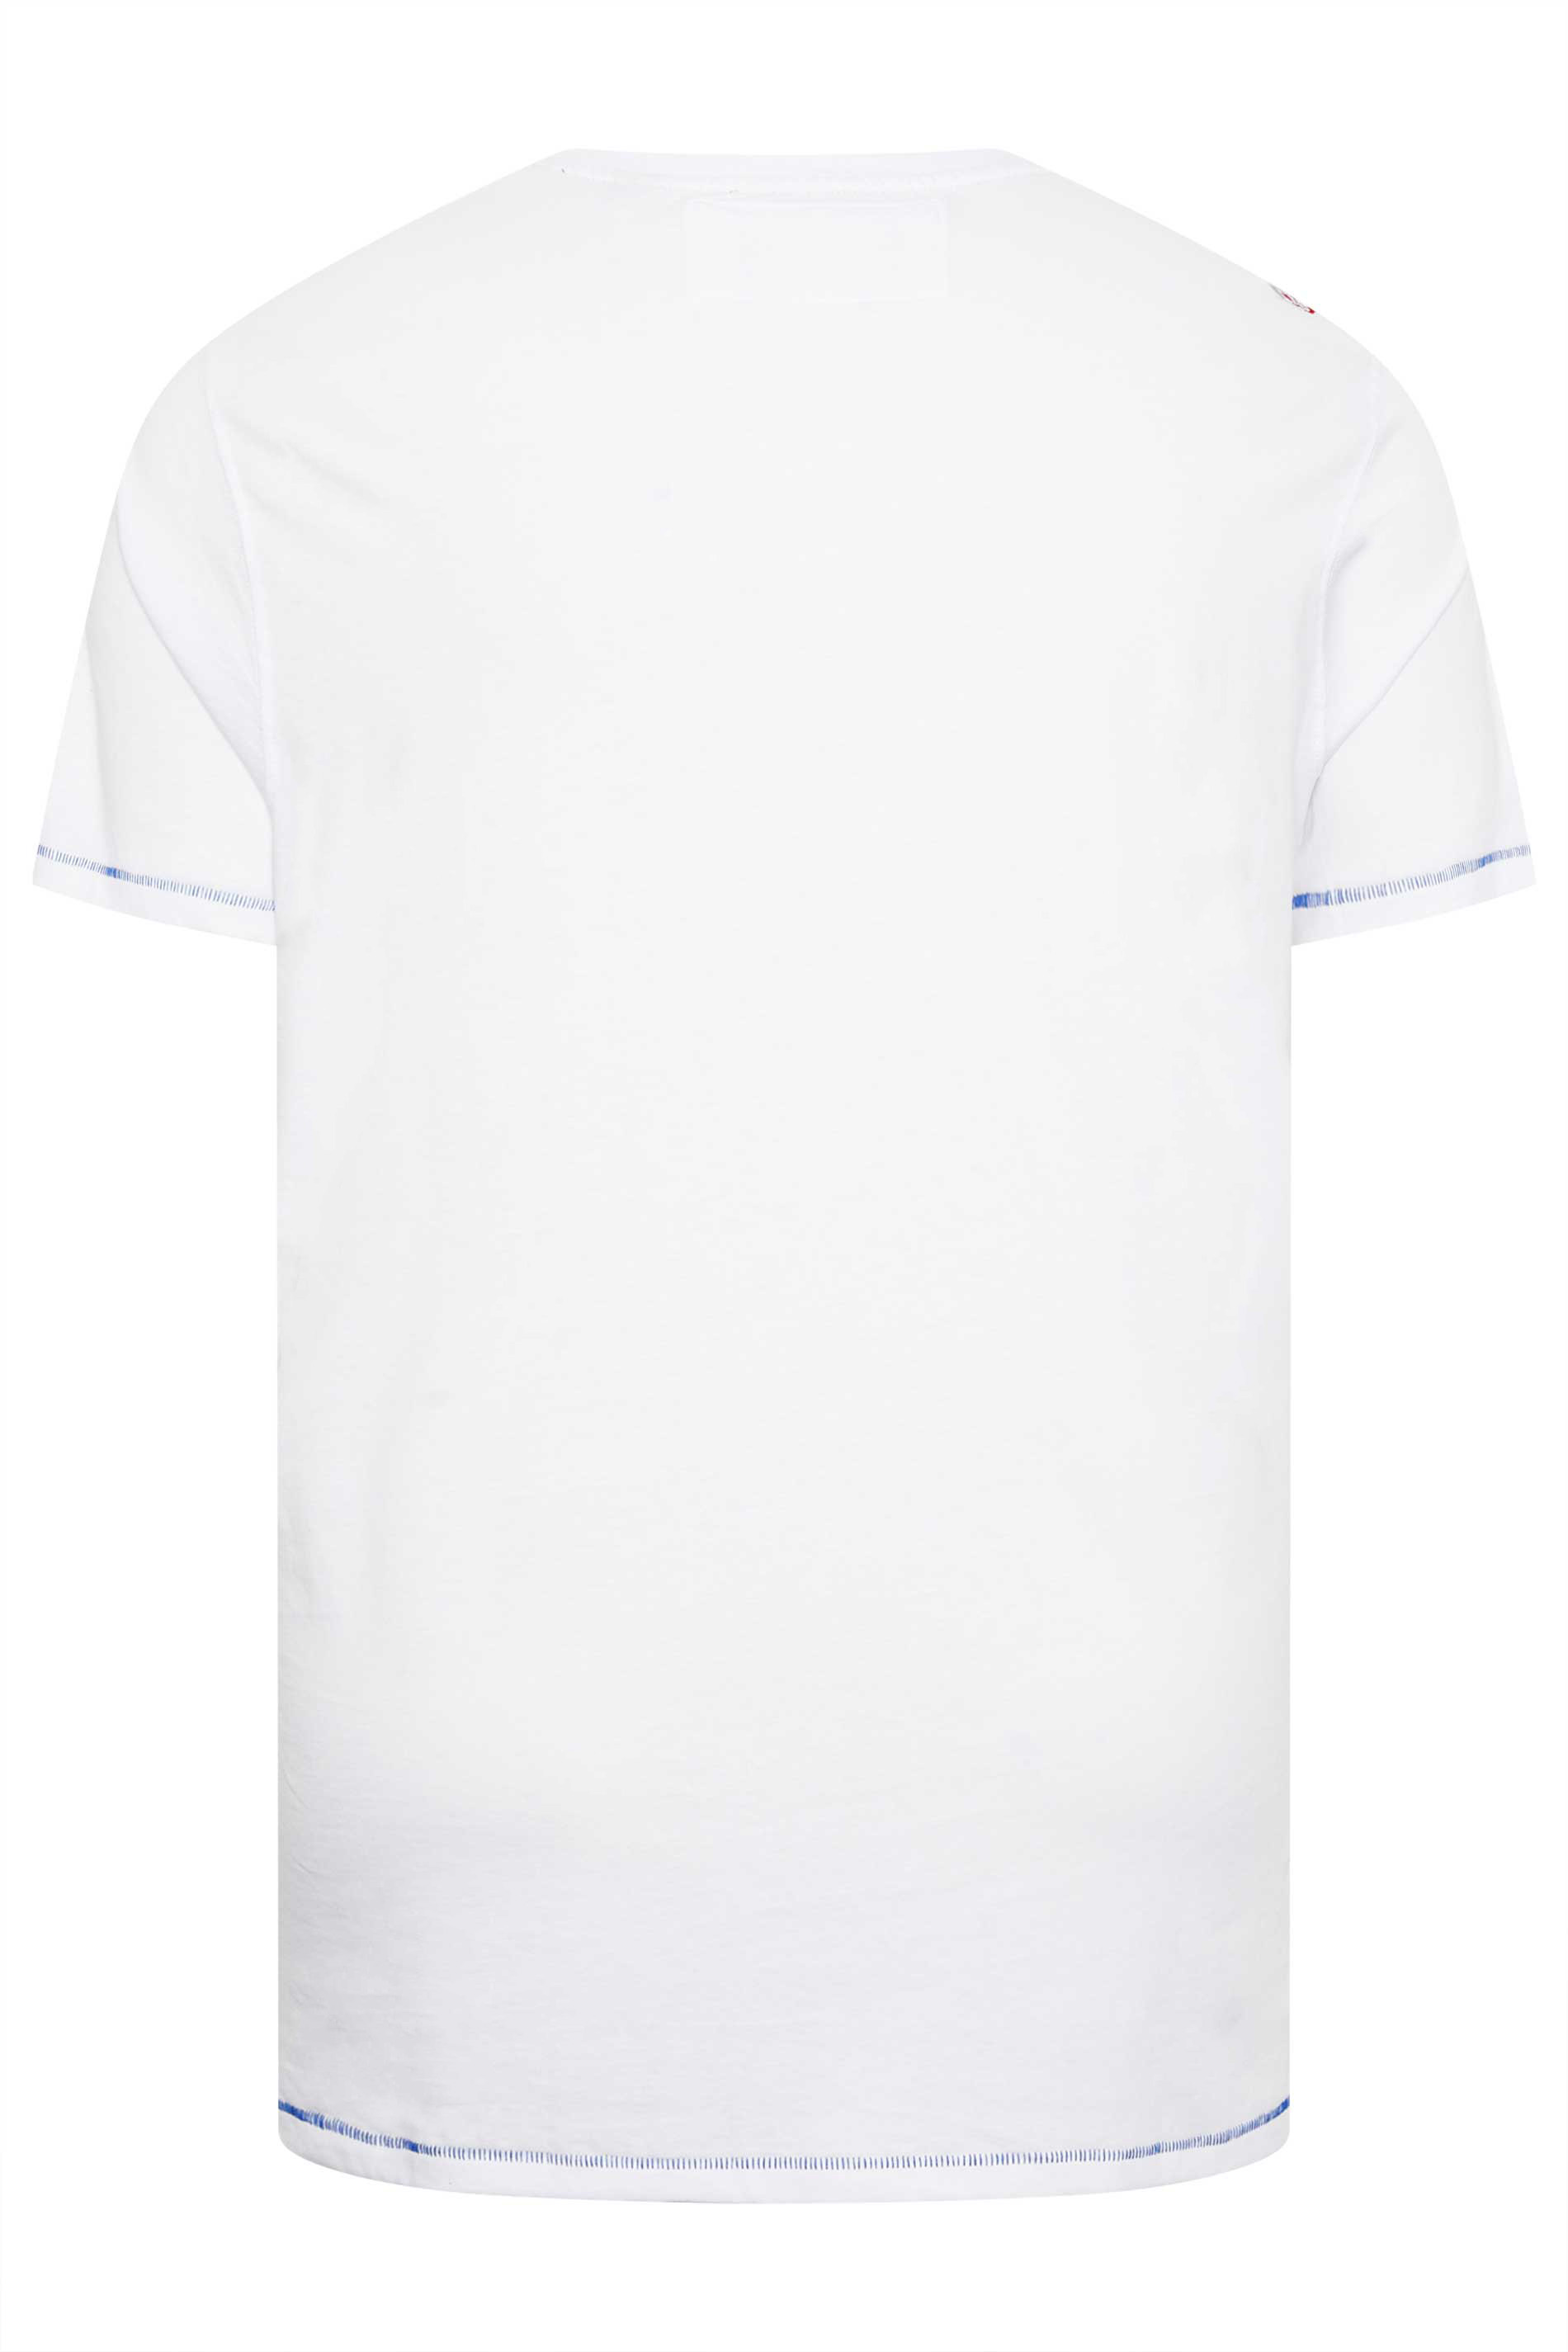 D555 Big & Tall White 'Maui' Surf Print T-Shirt | BadRhino 3